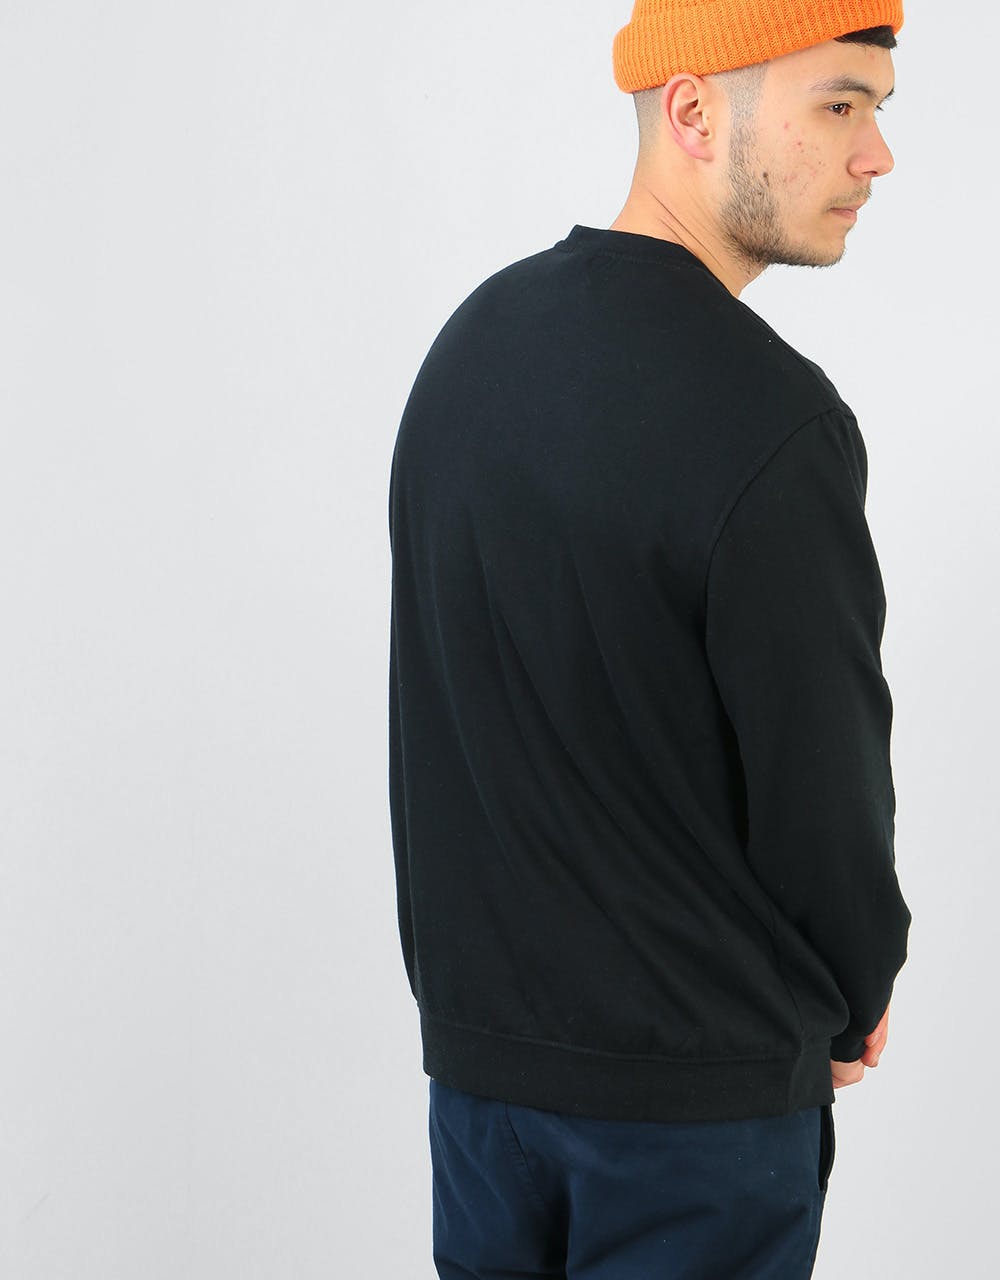 Santa Cruz Classic Dot Crew Sweatshirt- Black